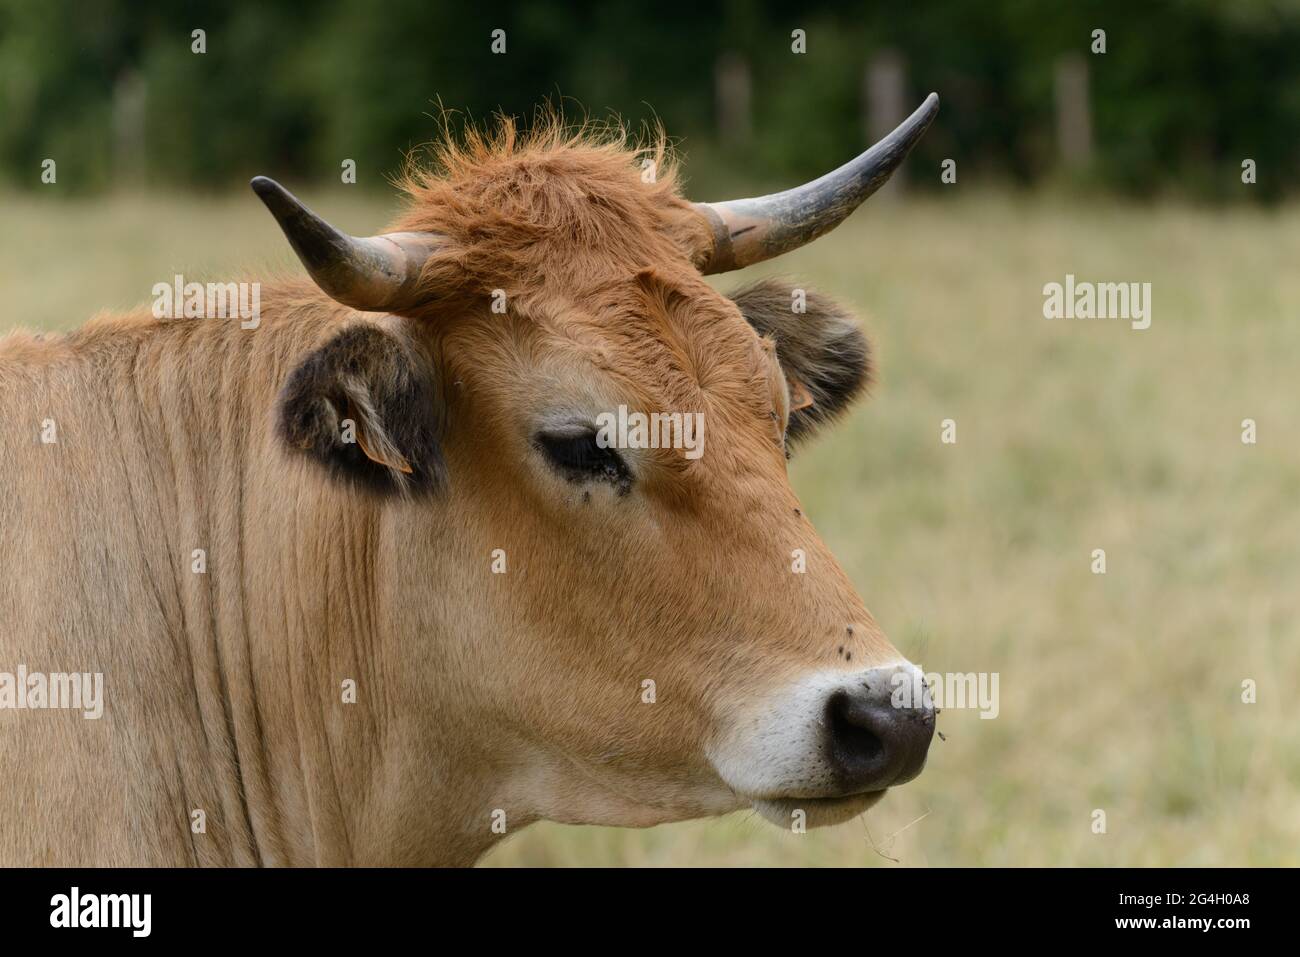 Cow portrait from cattle breed La Maraichine grazing in farmland fields in Marais Poitevin, Charente Maritime, France Stock Photo